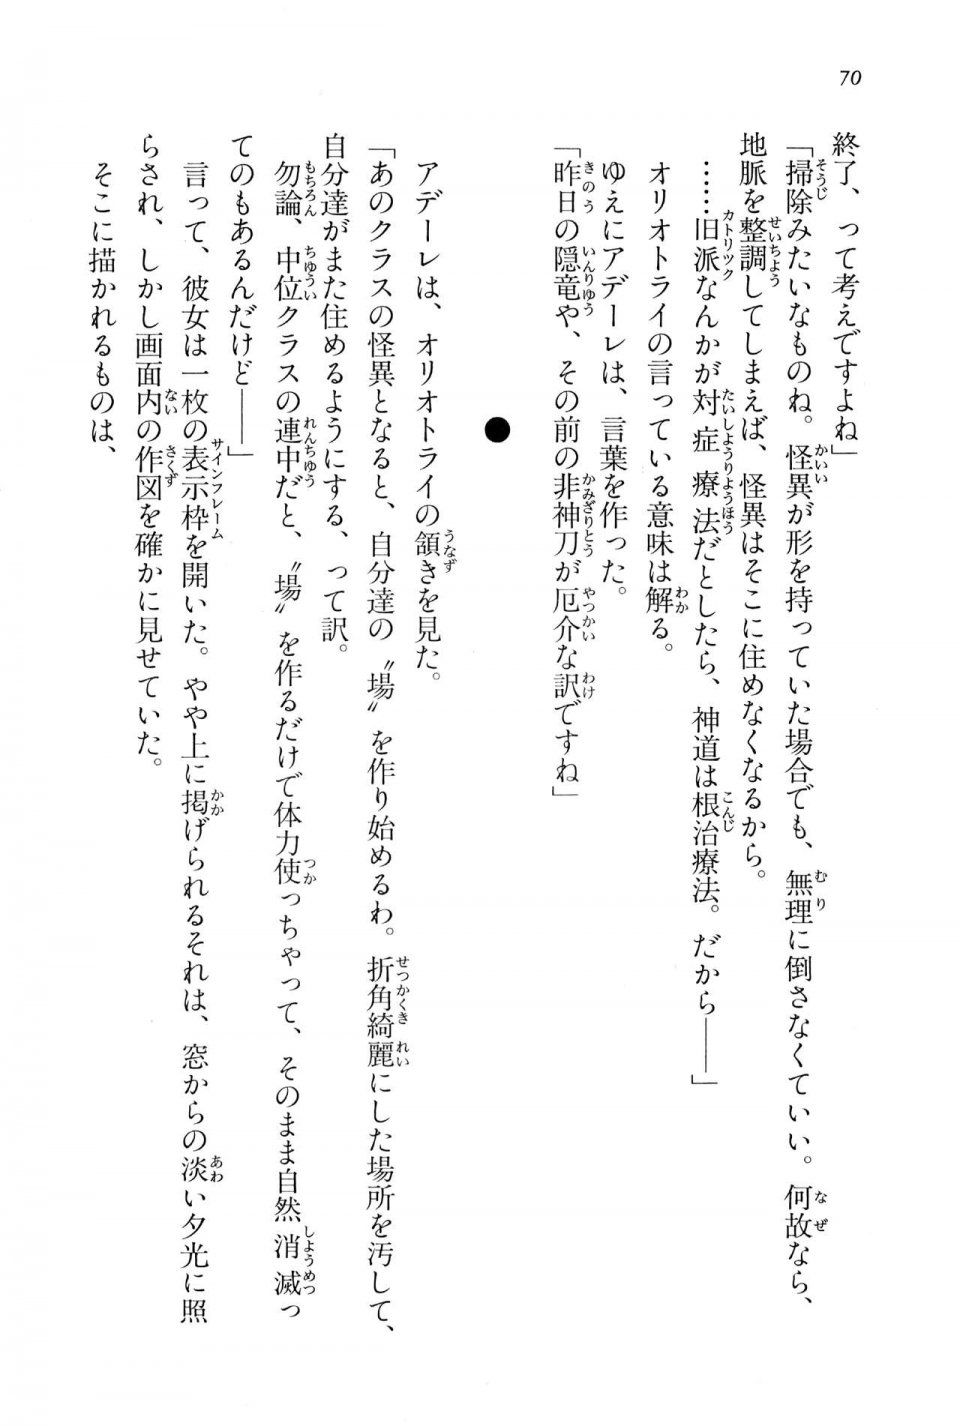 Kyoukai Senjou no Horizon BD Special Mininovel Vol 6(3B) - Photo #74